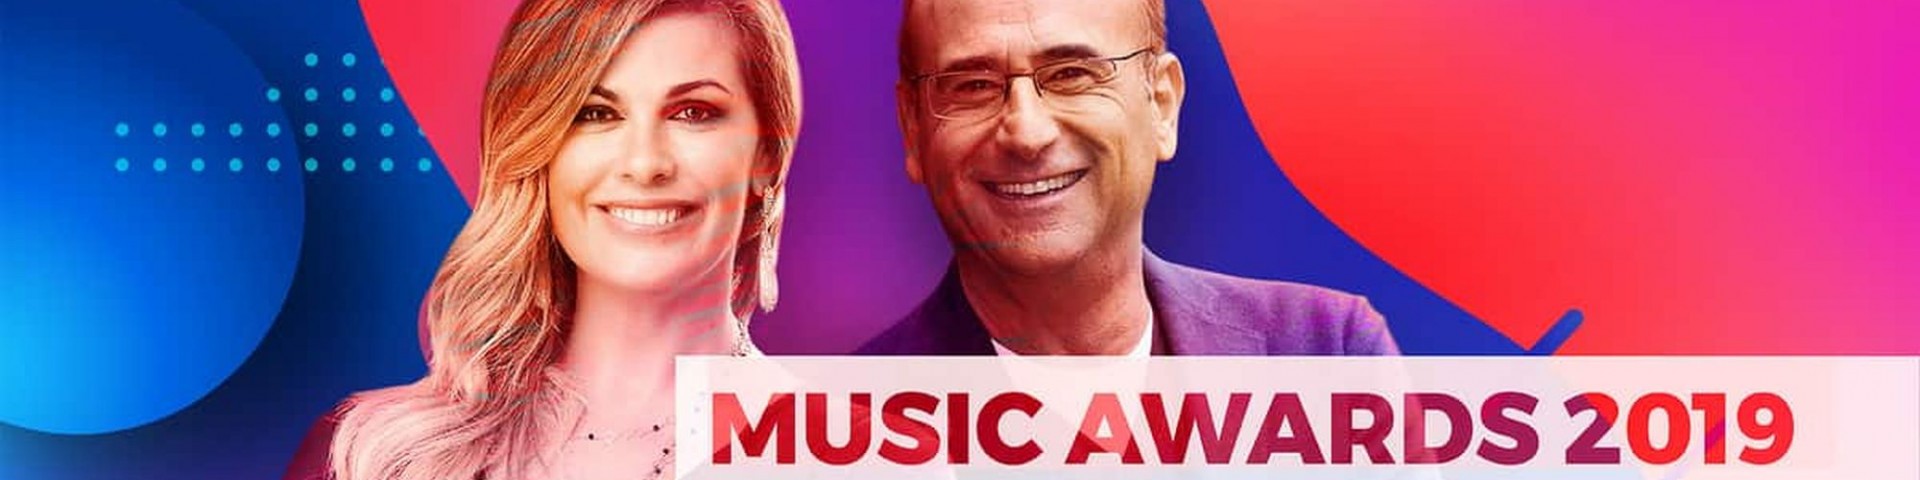 Music Awards 2019: divisione cantanti nelle due serate?